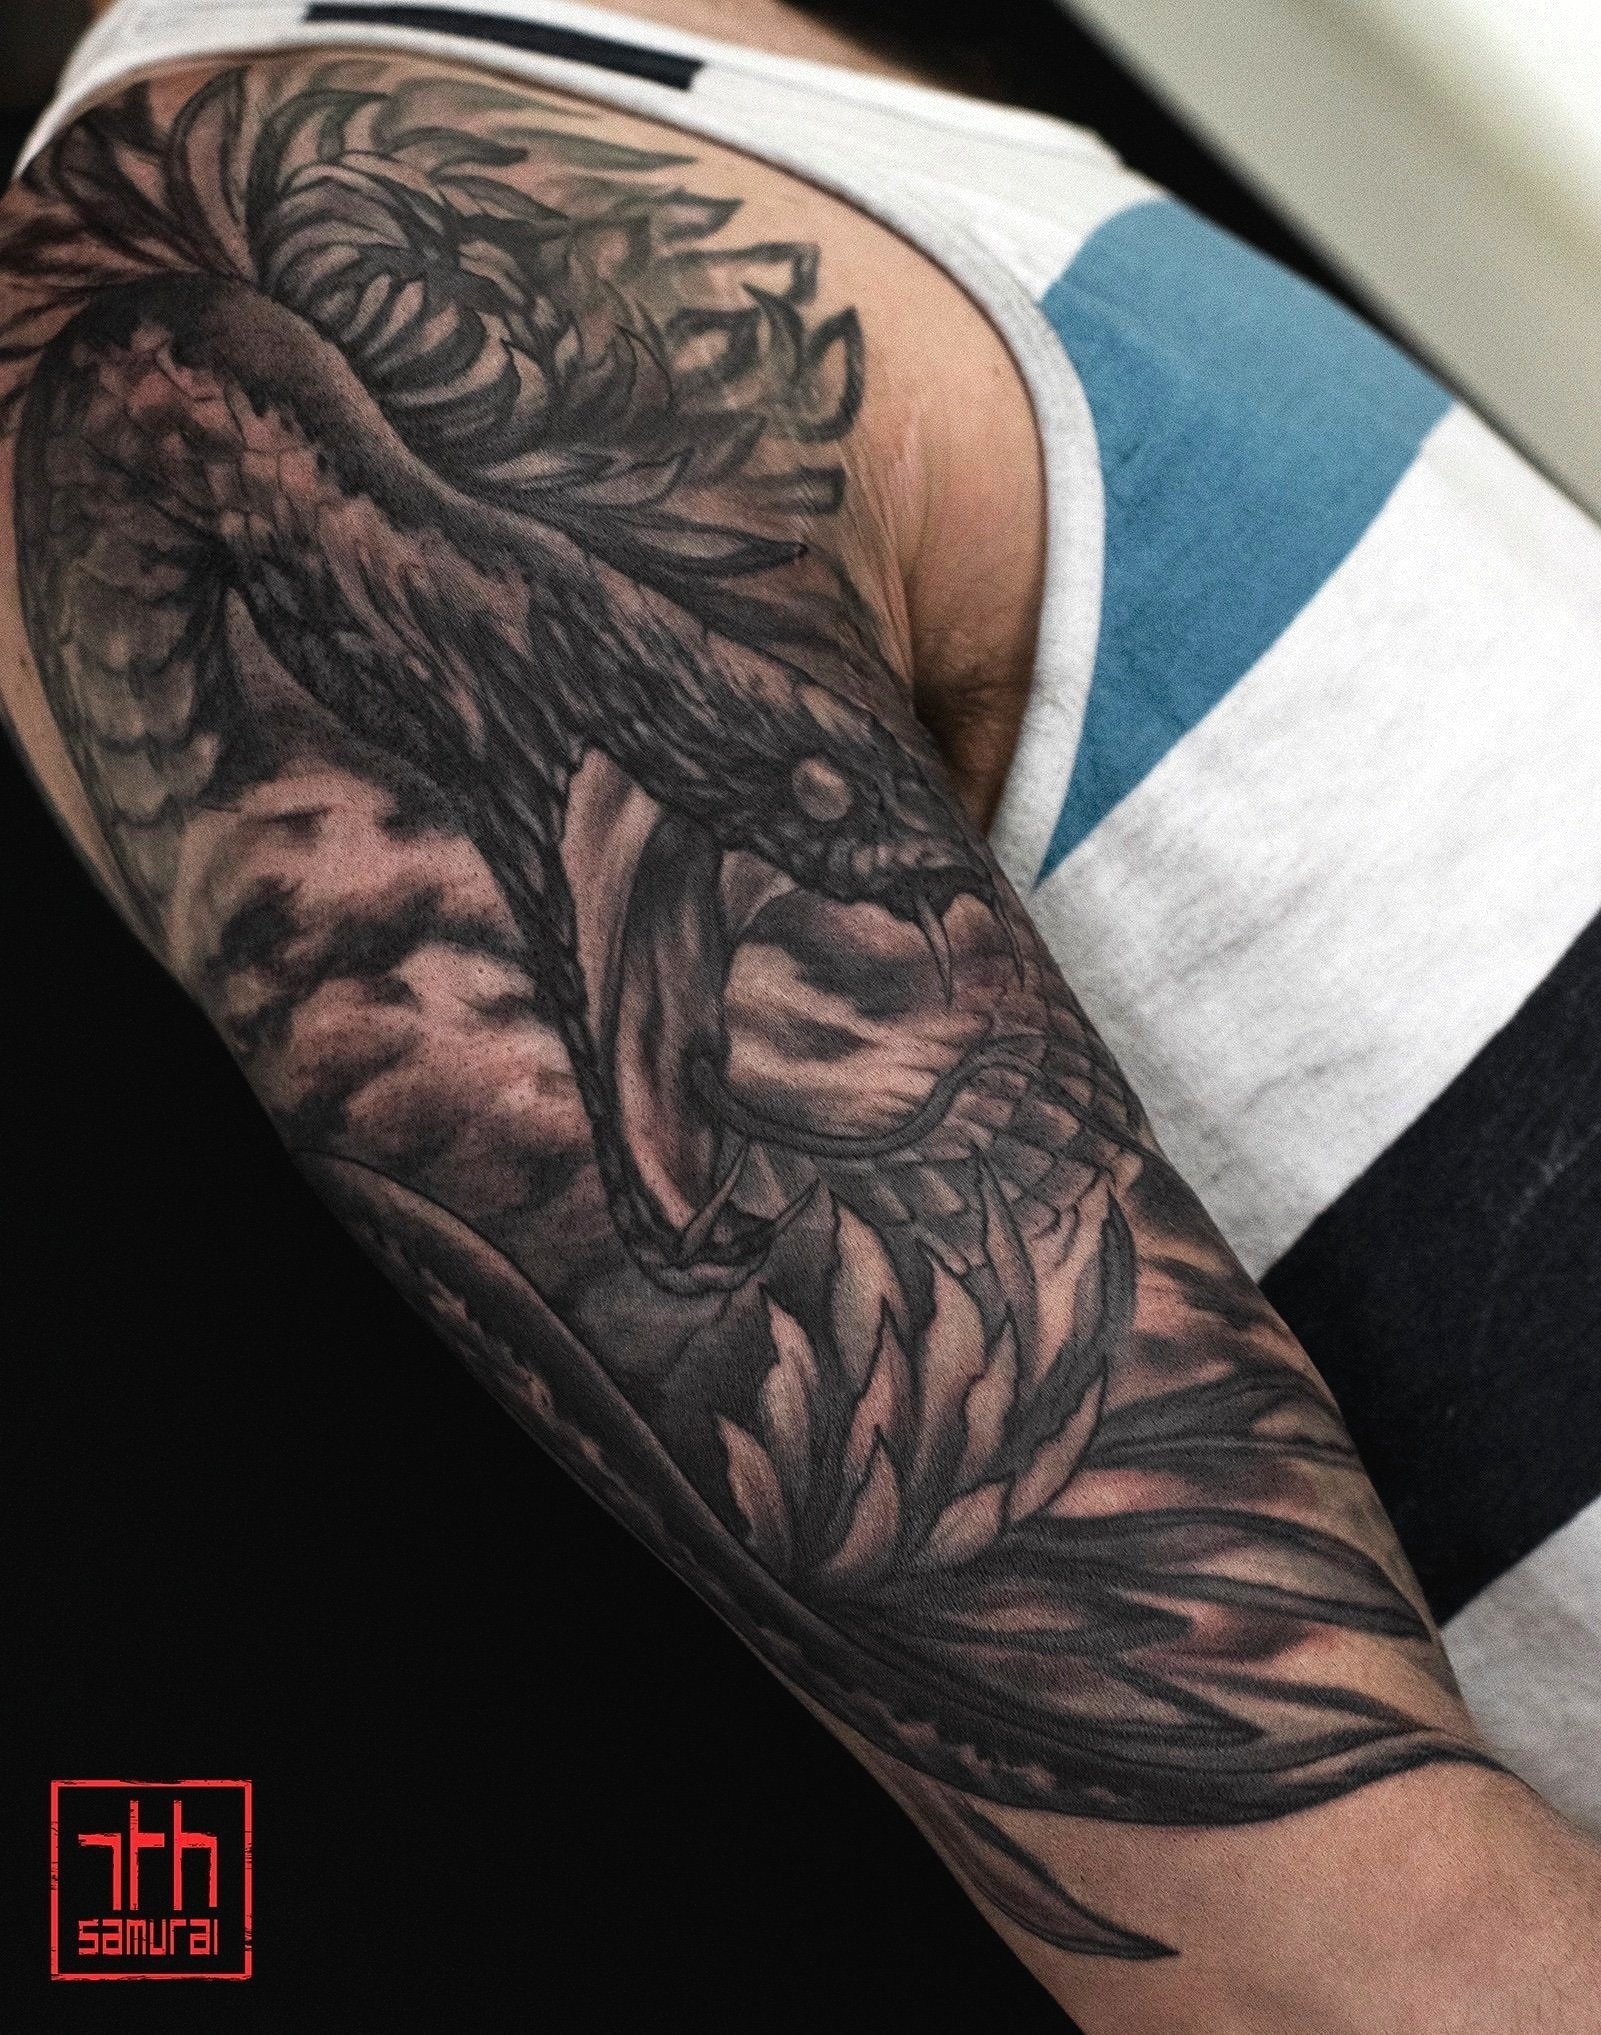 chrysanthemum snake   men’s upper arm asian tattoo flower sleeve   convention  asian Tattoo artist: Kai at 7th Samurai. YEG Edmonton, Alberta, Canada best 2020